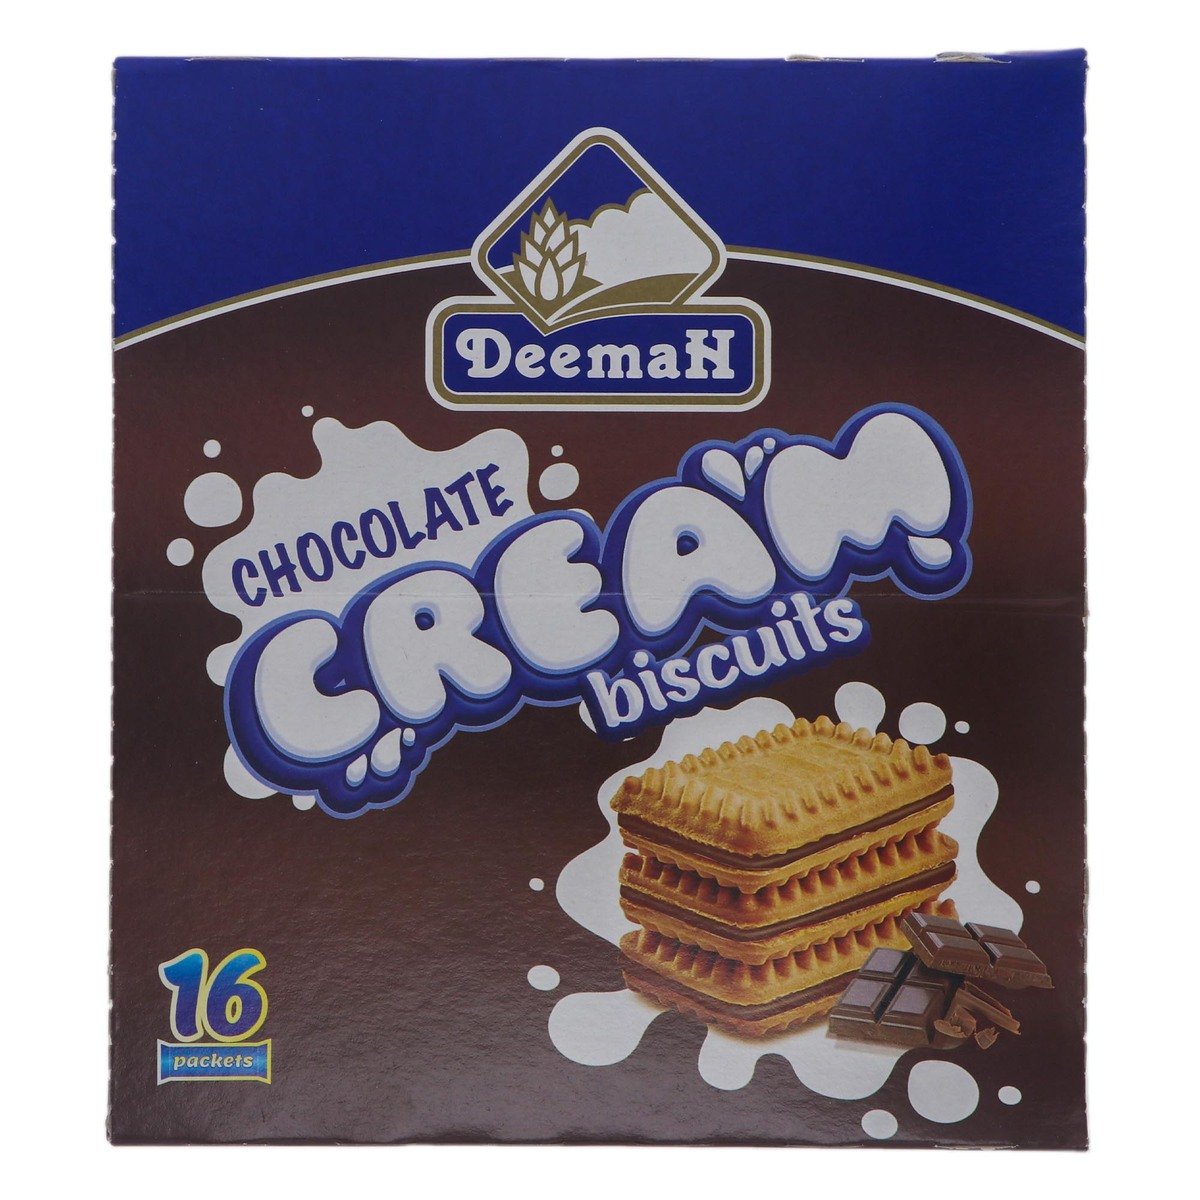 Deemah Chocolate Cream Biscuits 16 x 27g